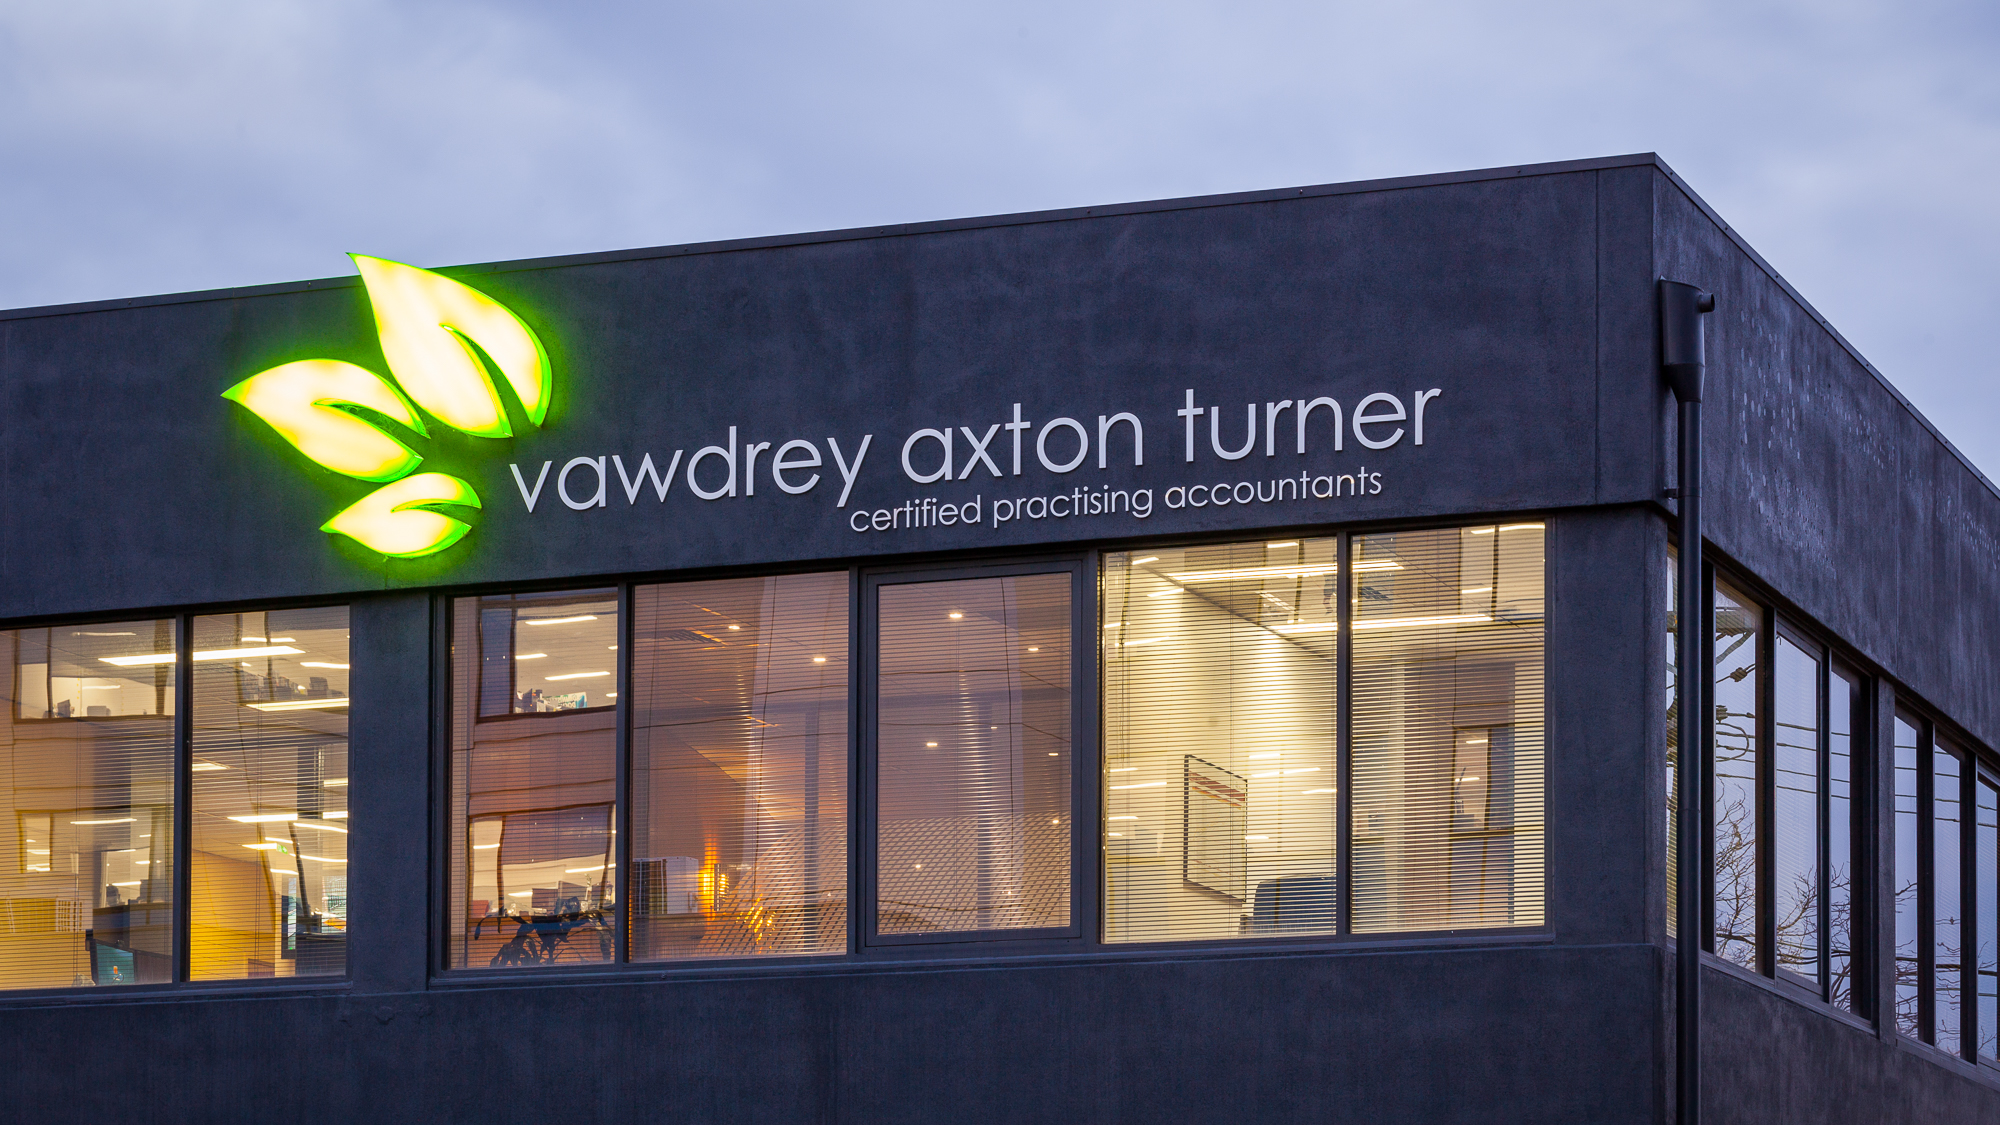 Vawdrey Axton Turner Pty Ltd